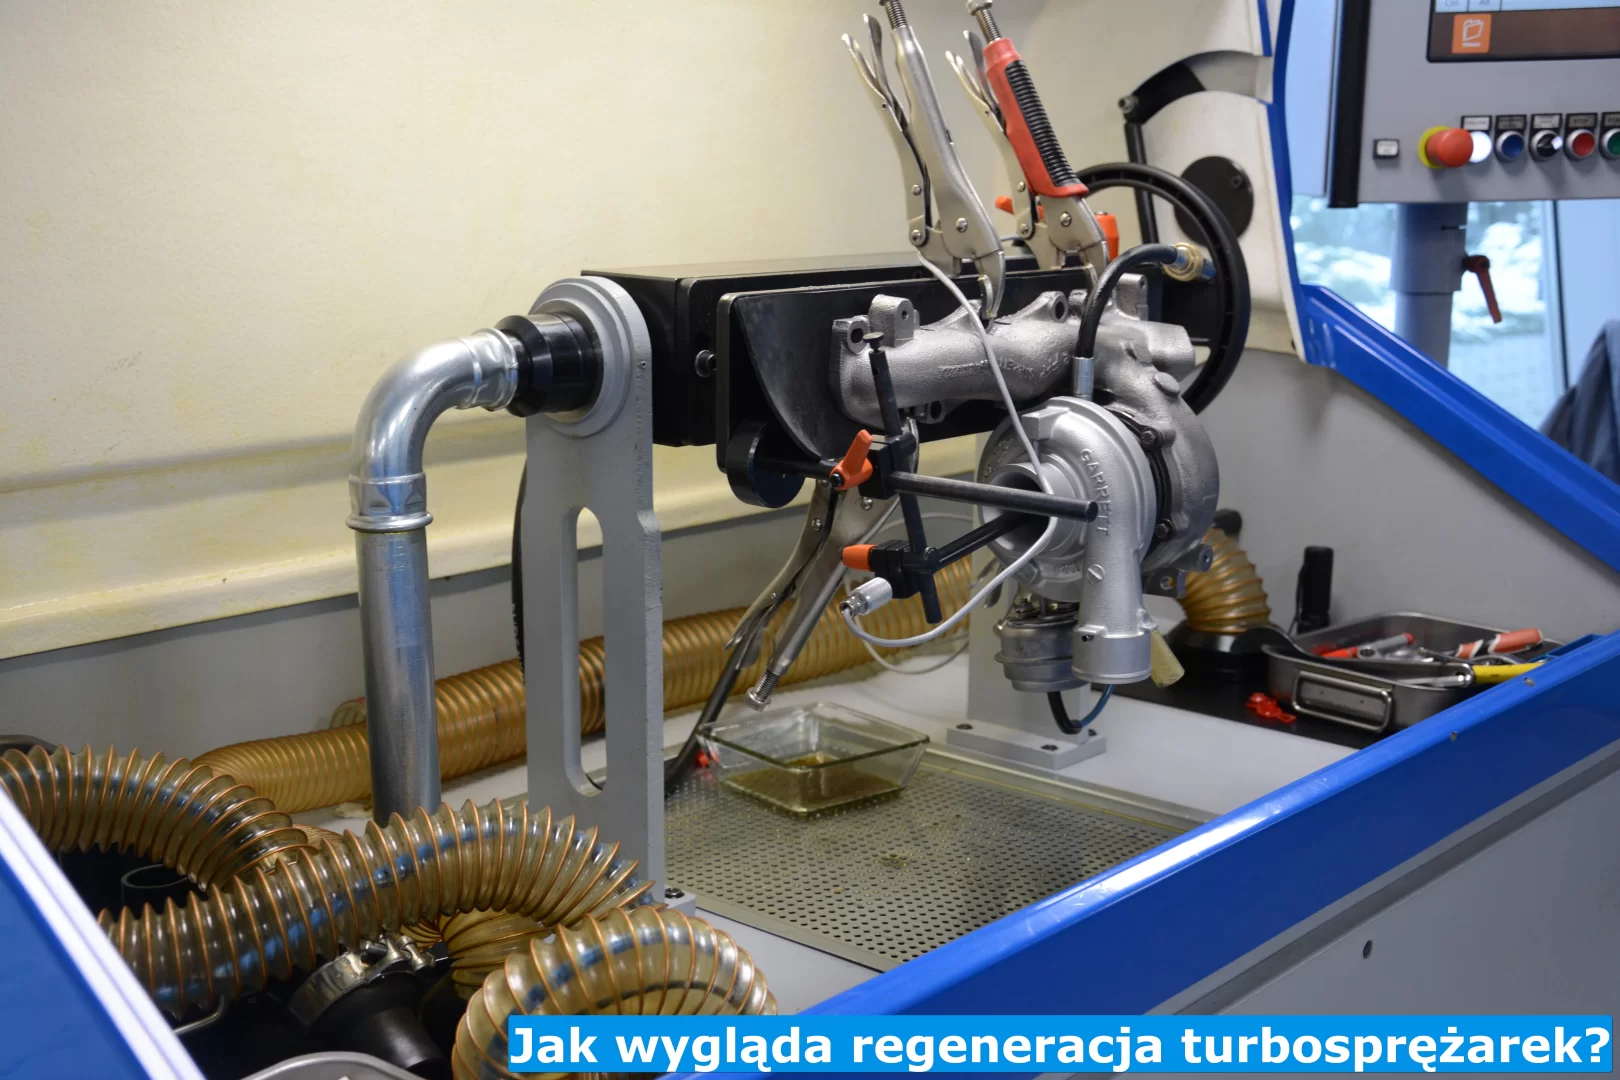 Jak wygląda regeneracja turbosprężarek?